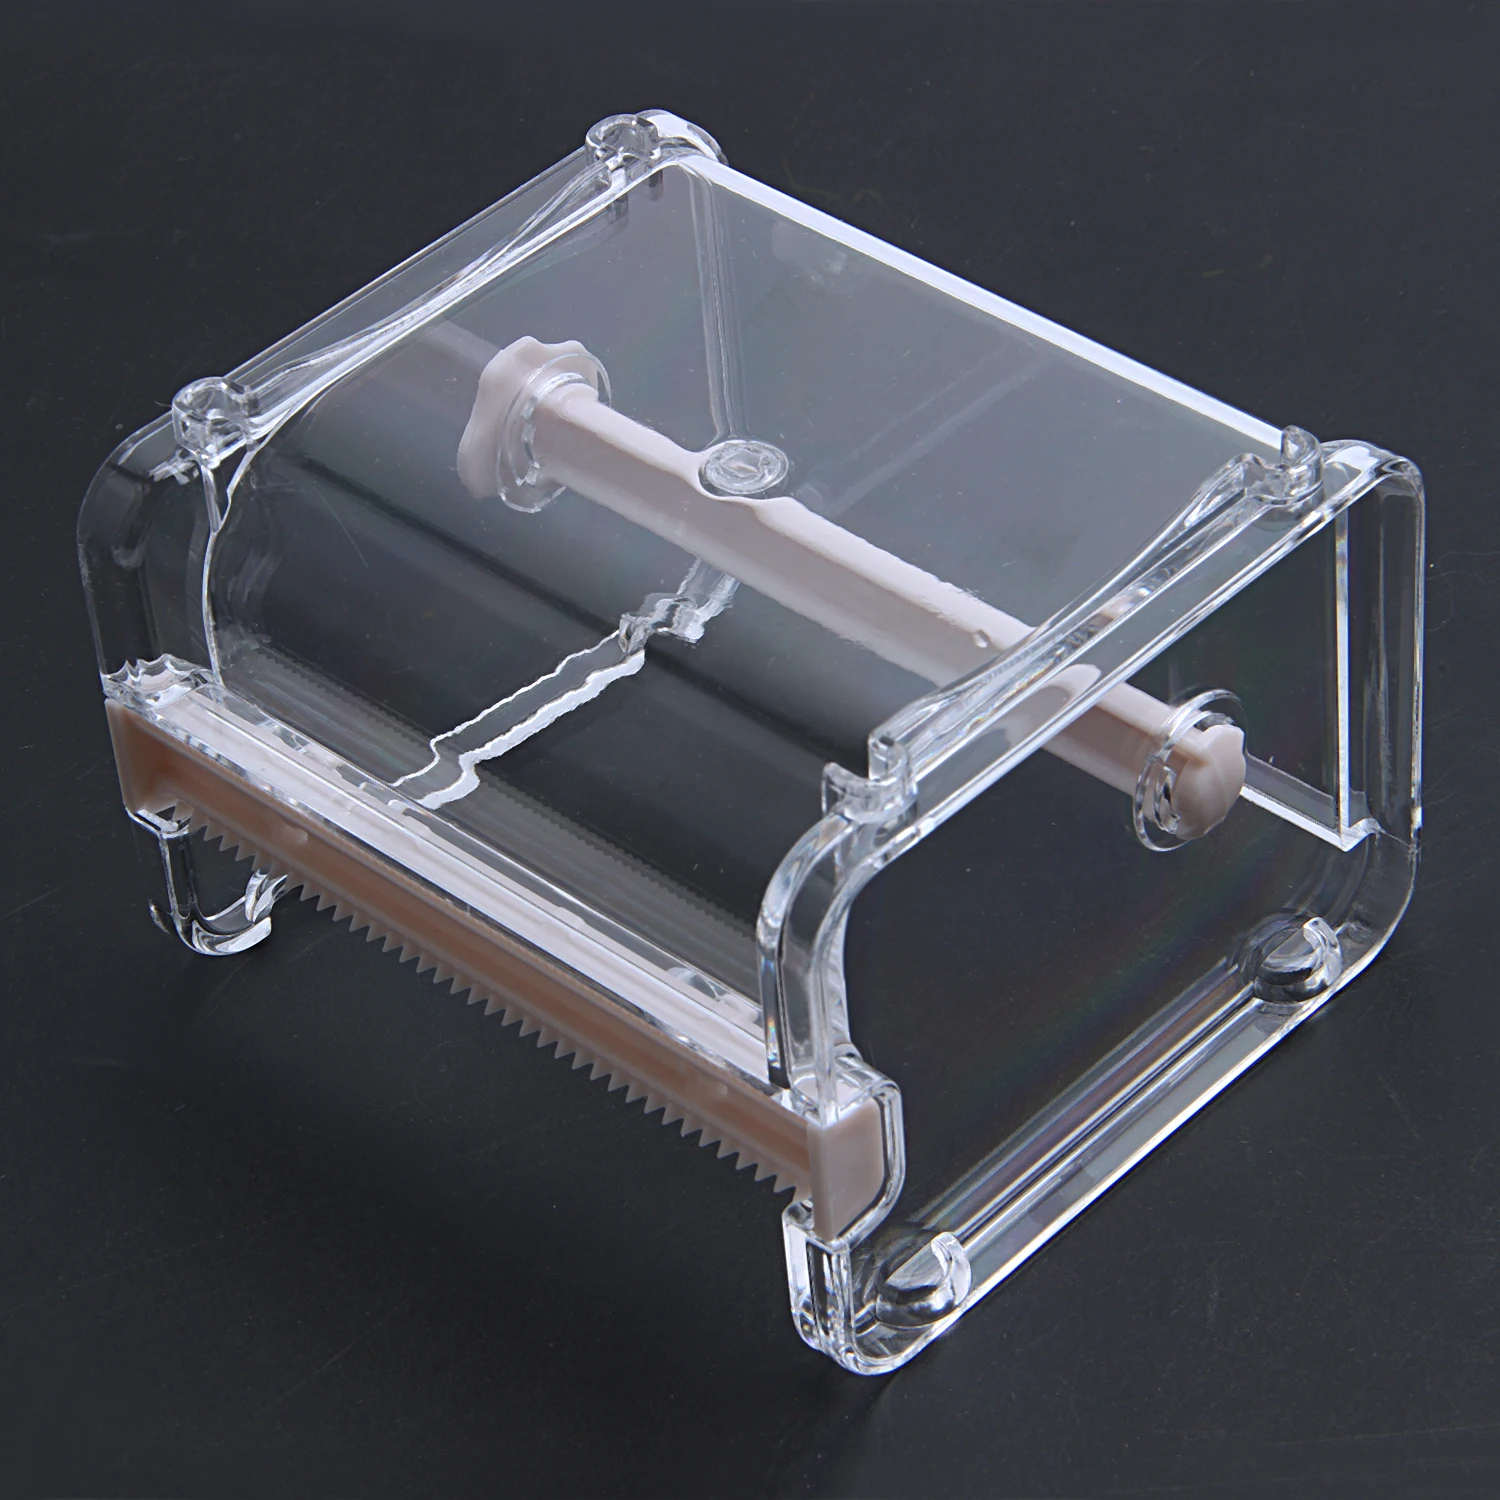 Японские канцелярские принадлежности магнитная лента органайзер для хранения